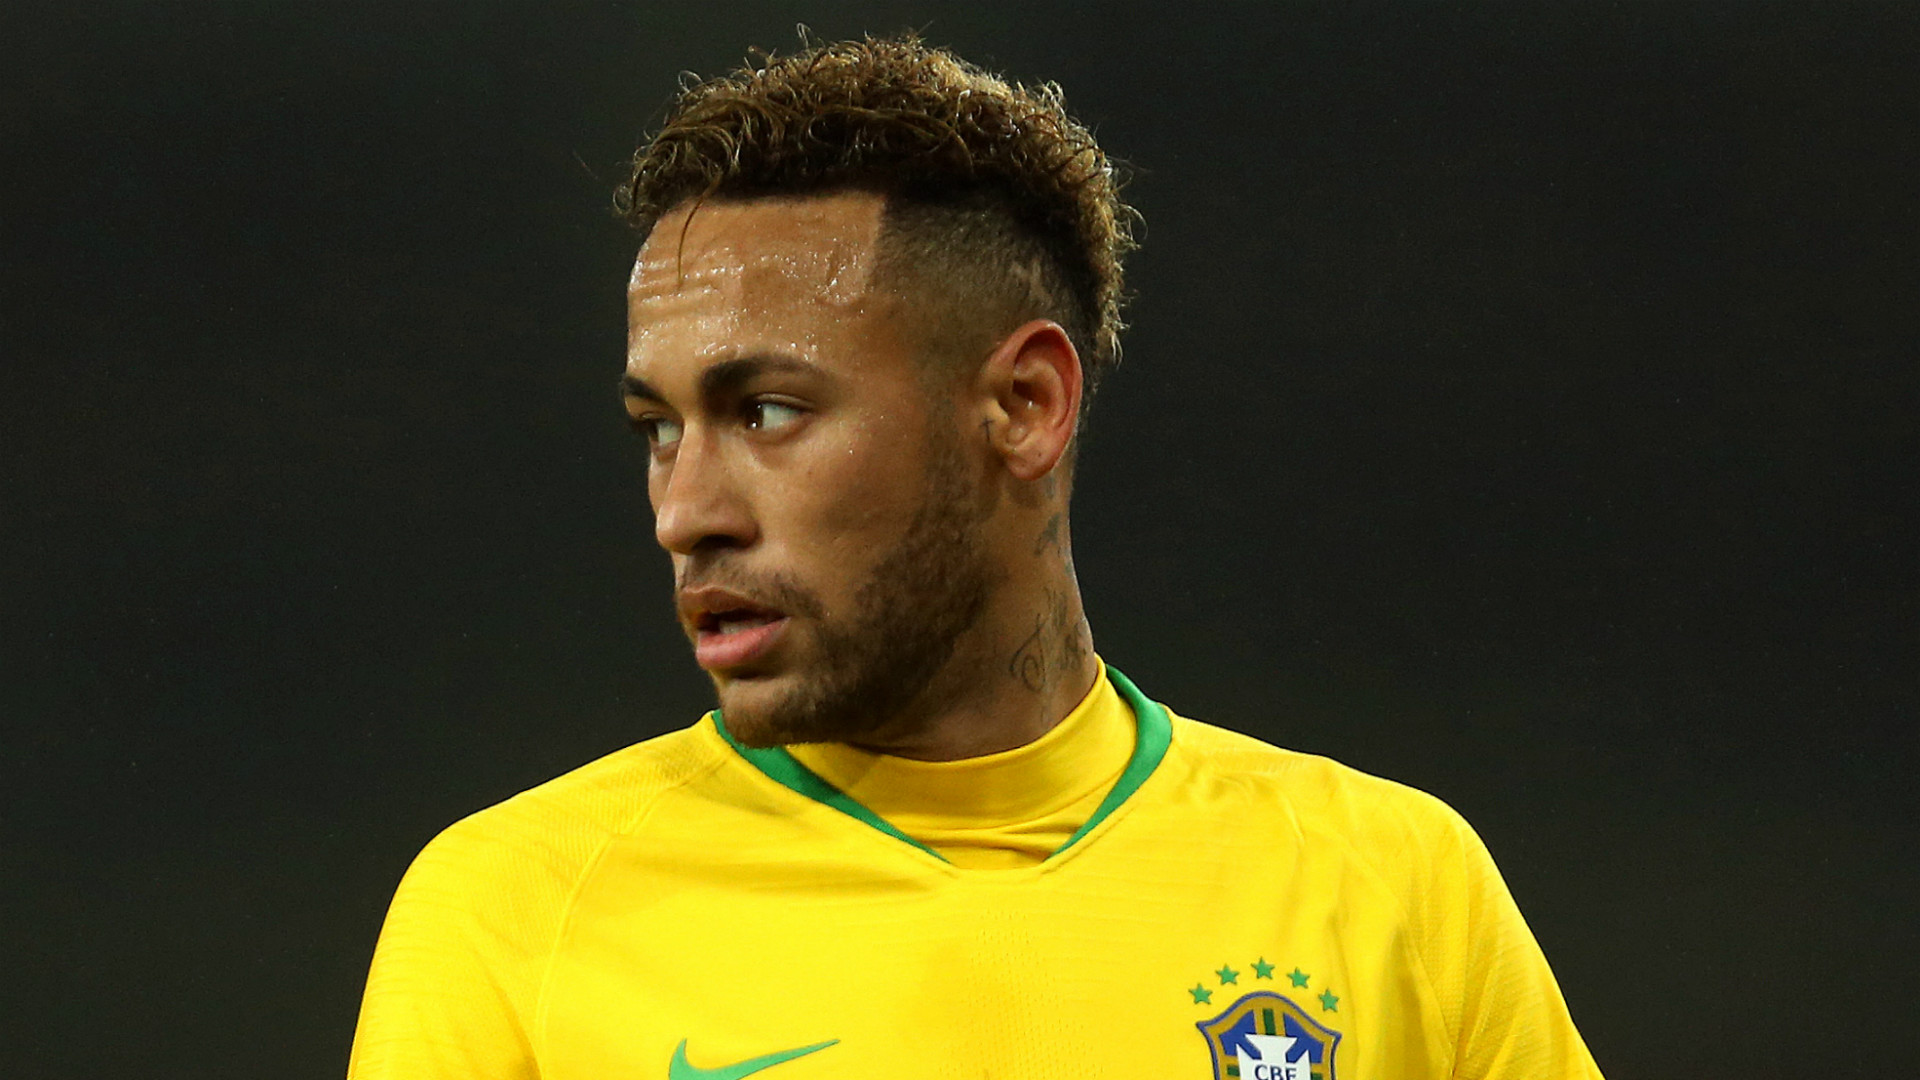  2019 Copa America: Brazil removes Neymar, appoints new captain